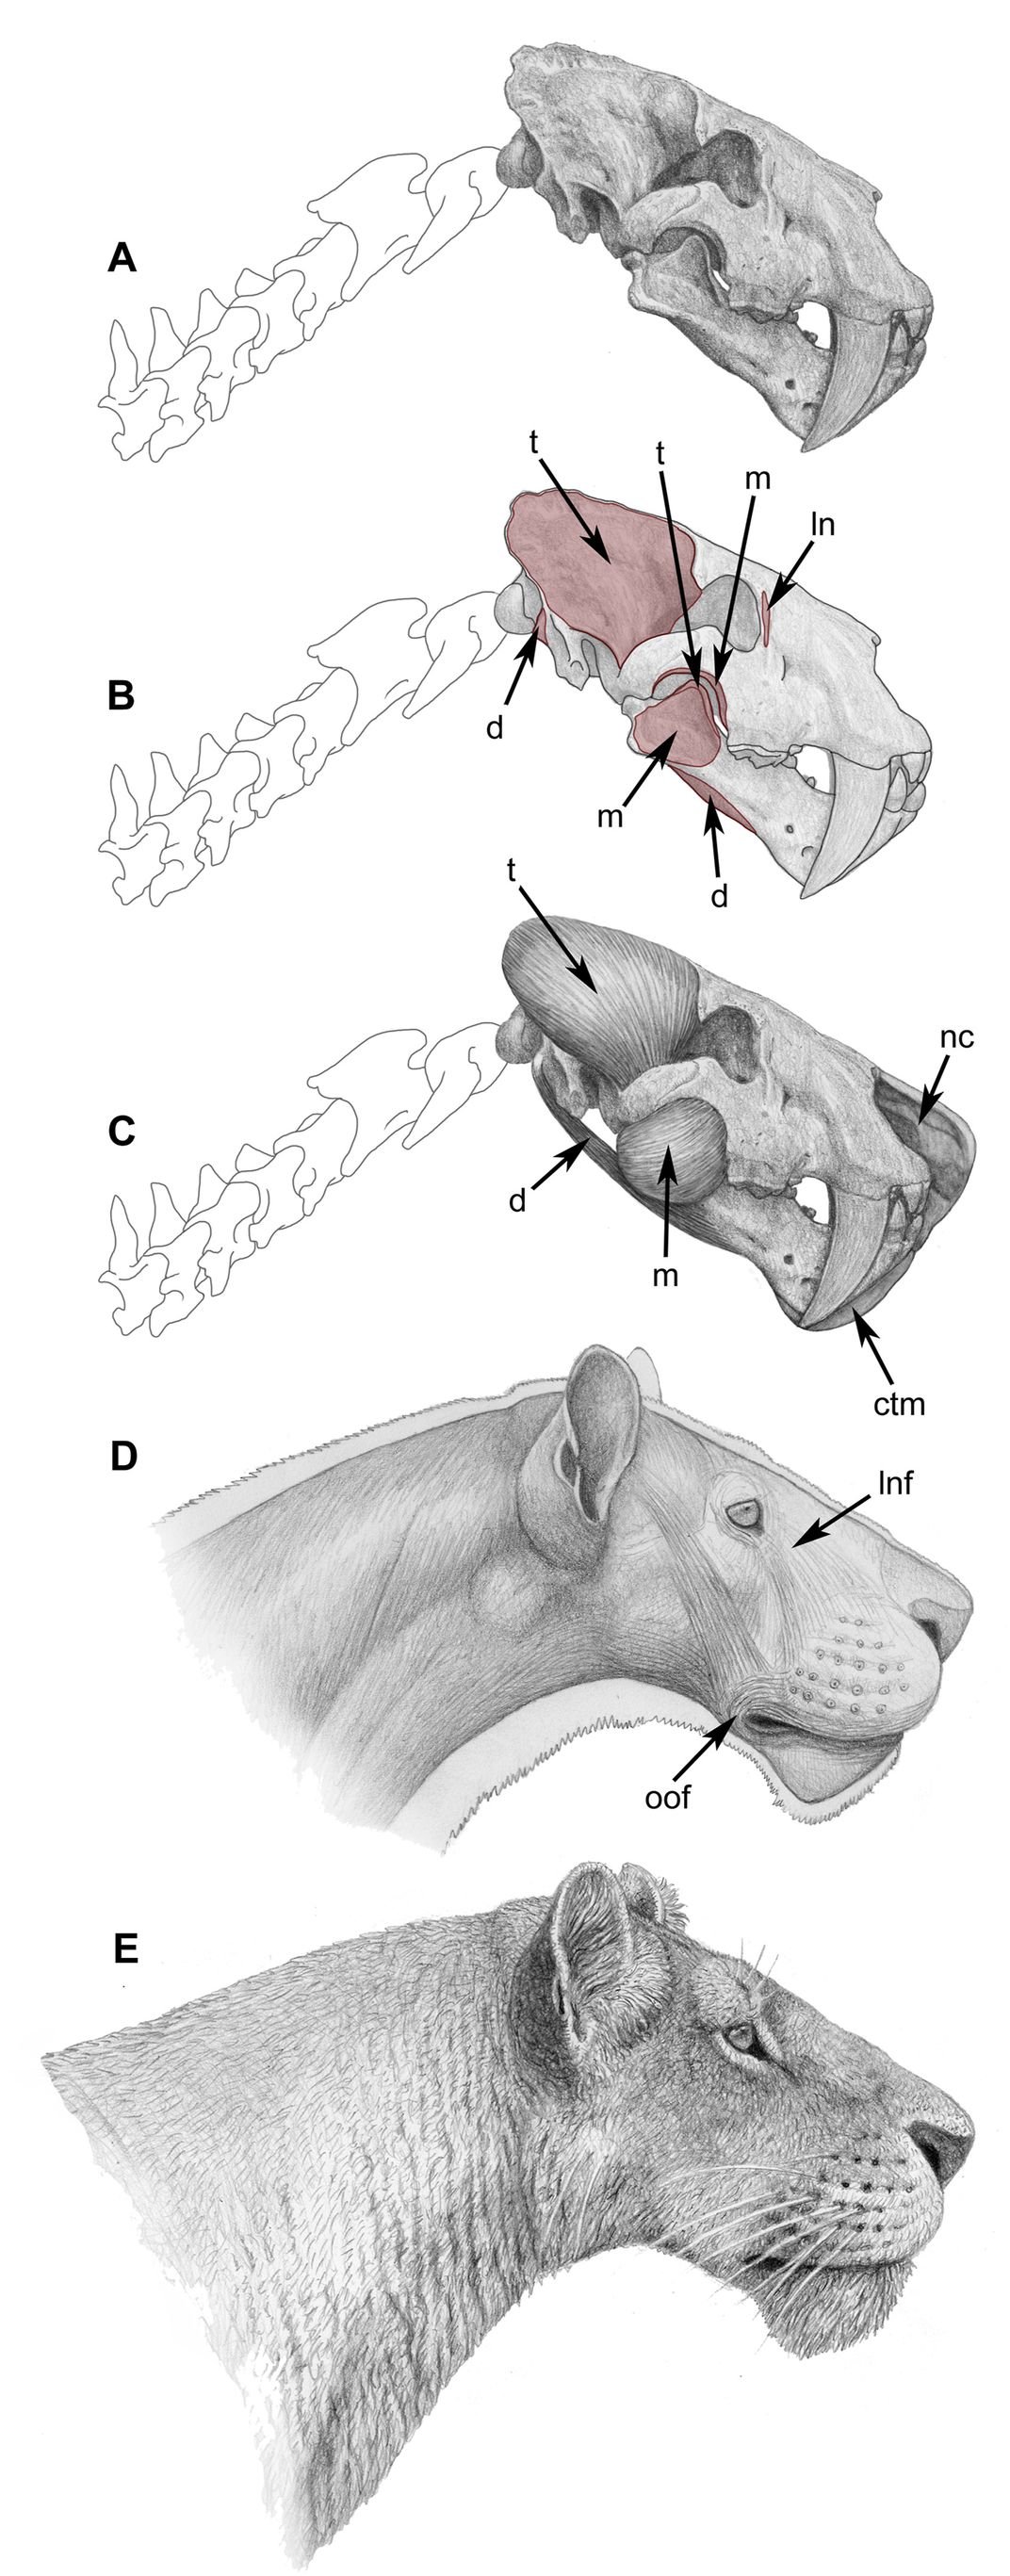 Illustration of saber-tooth cat